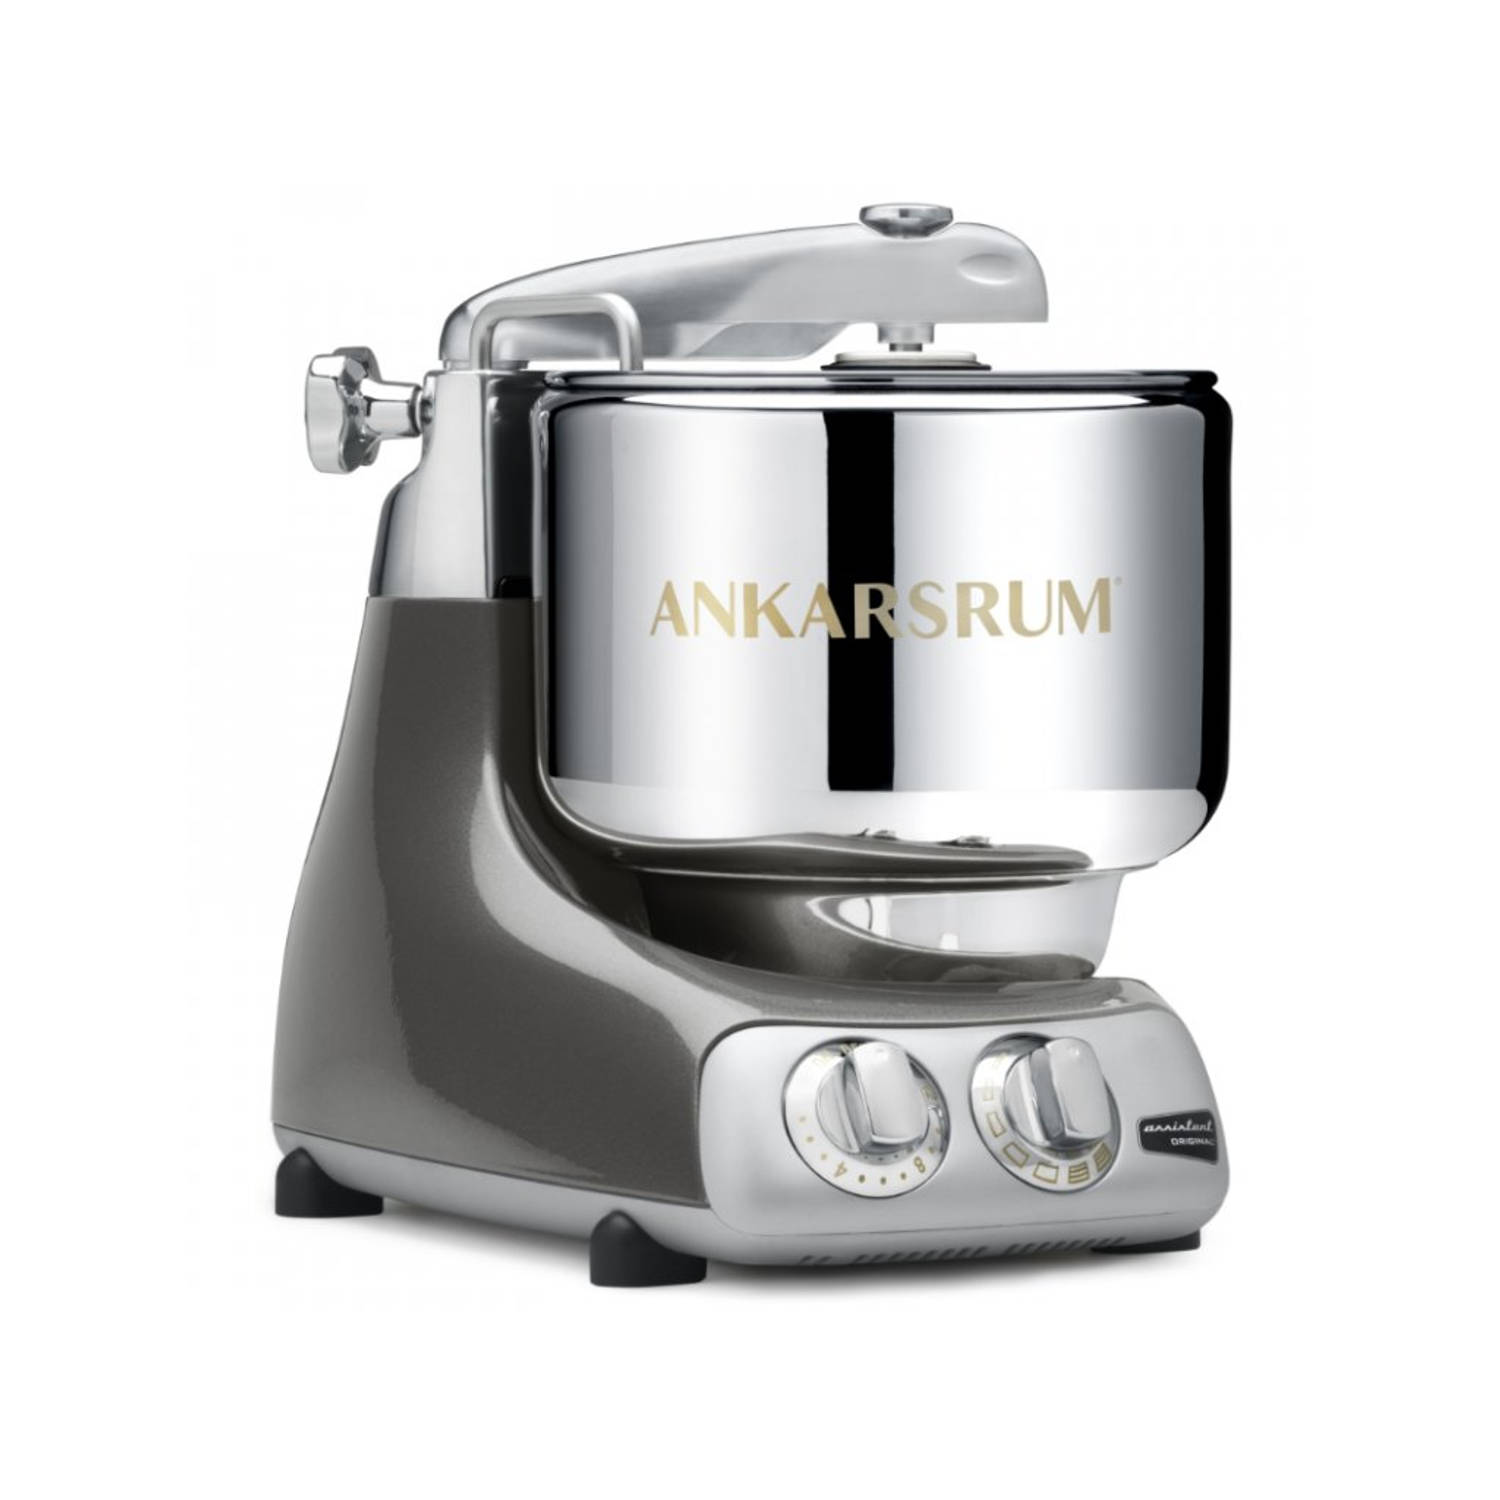 Ankarsrum Assistent Original AKR6230 keukenmachine zwart-zilver 7 L